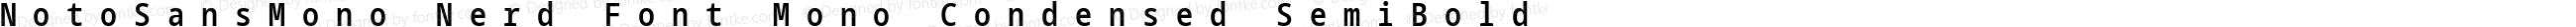 Noto Sans Mono Condensed SemiBold Nerd Font Complete Mono